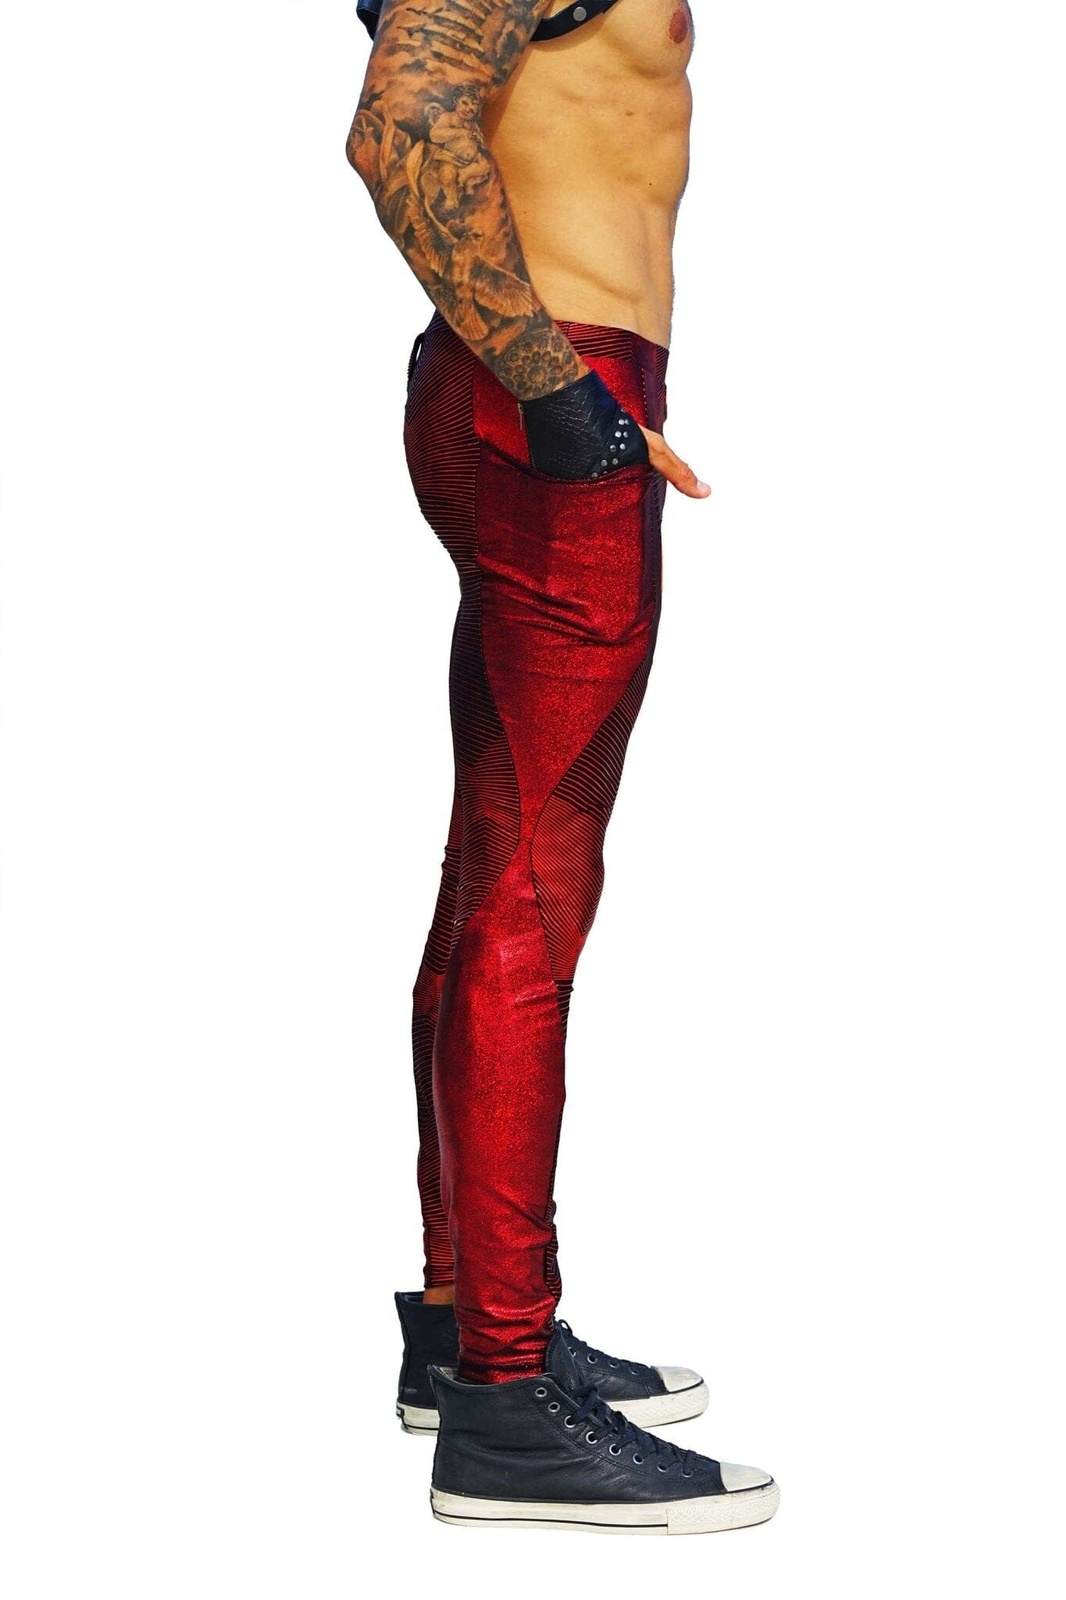 Diablo Red Meggings Mens Rave Pants from Love Khaos Festival Clothing brand